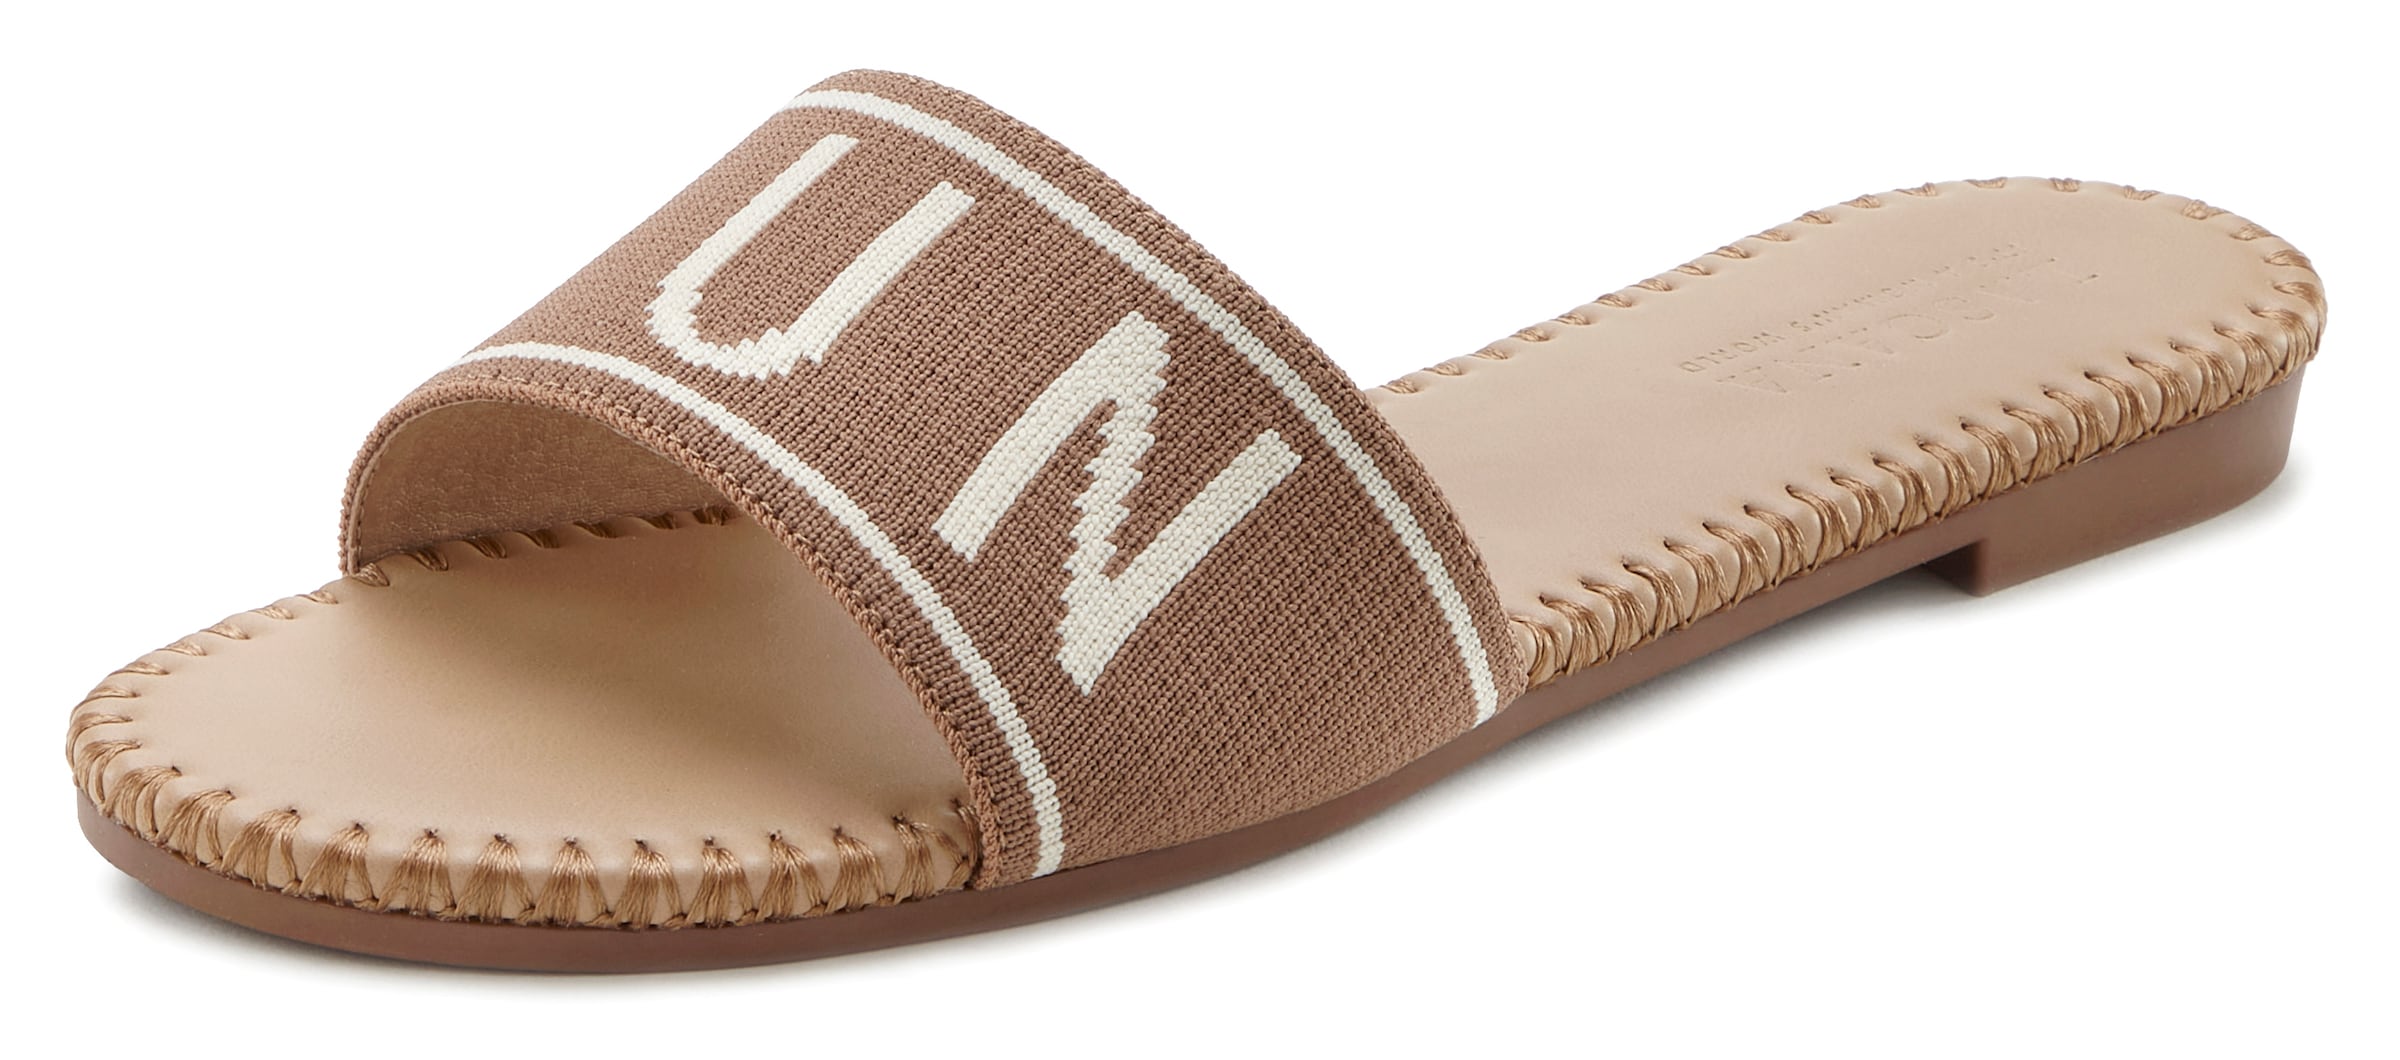 LASCANA Pantolette, Mule, Sandale, offener Schuh aus Textil mit modischem Schriftzug VEGAN